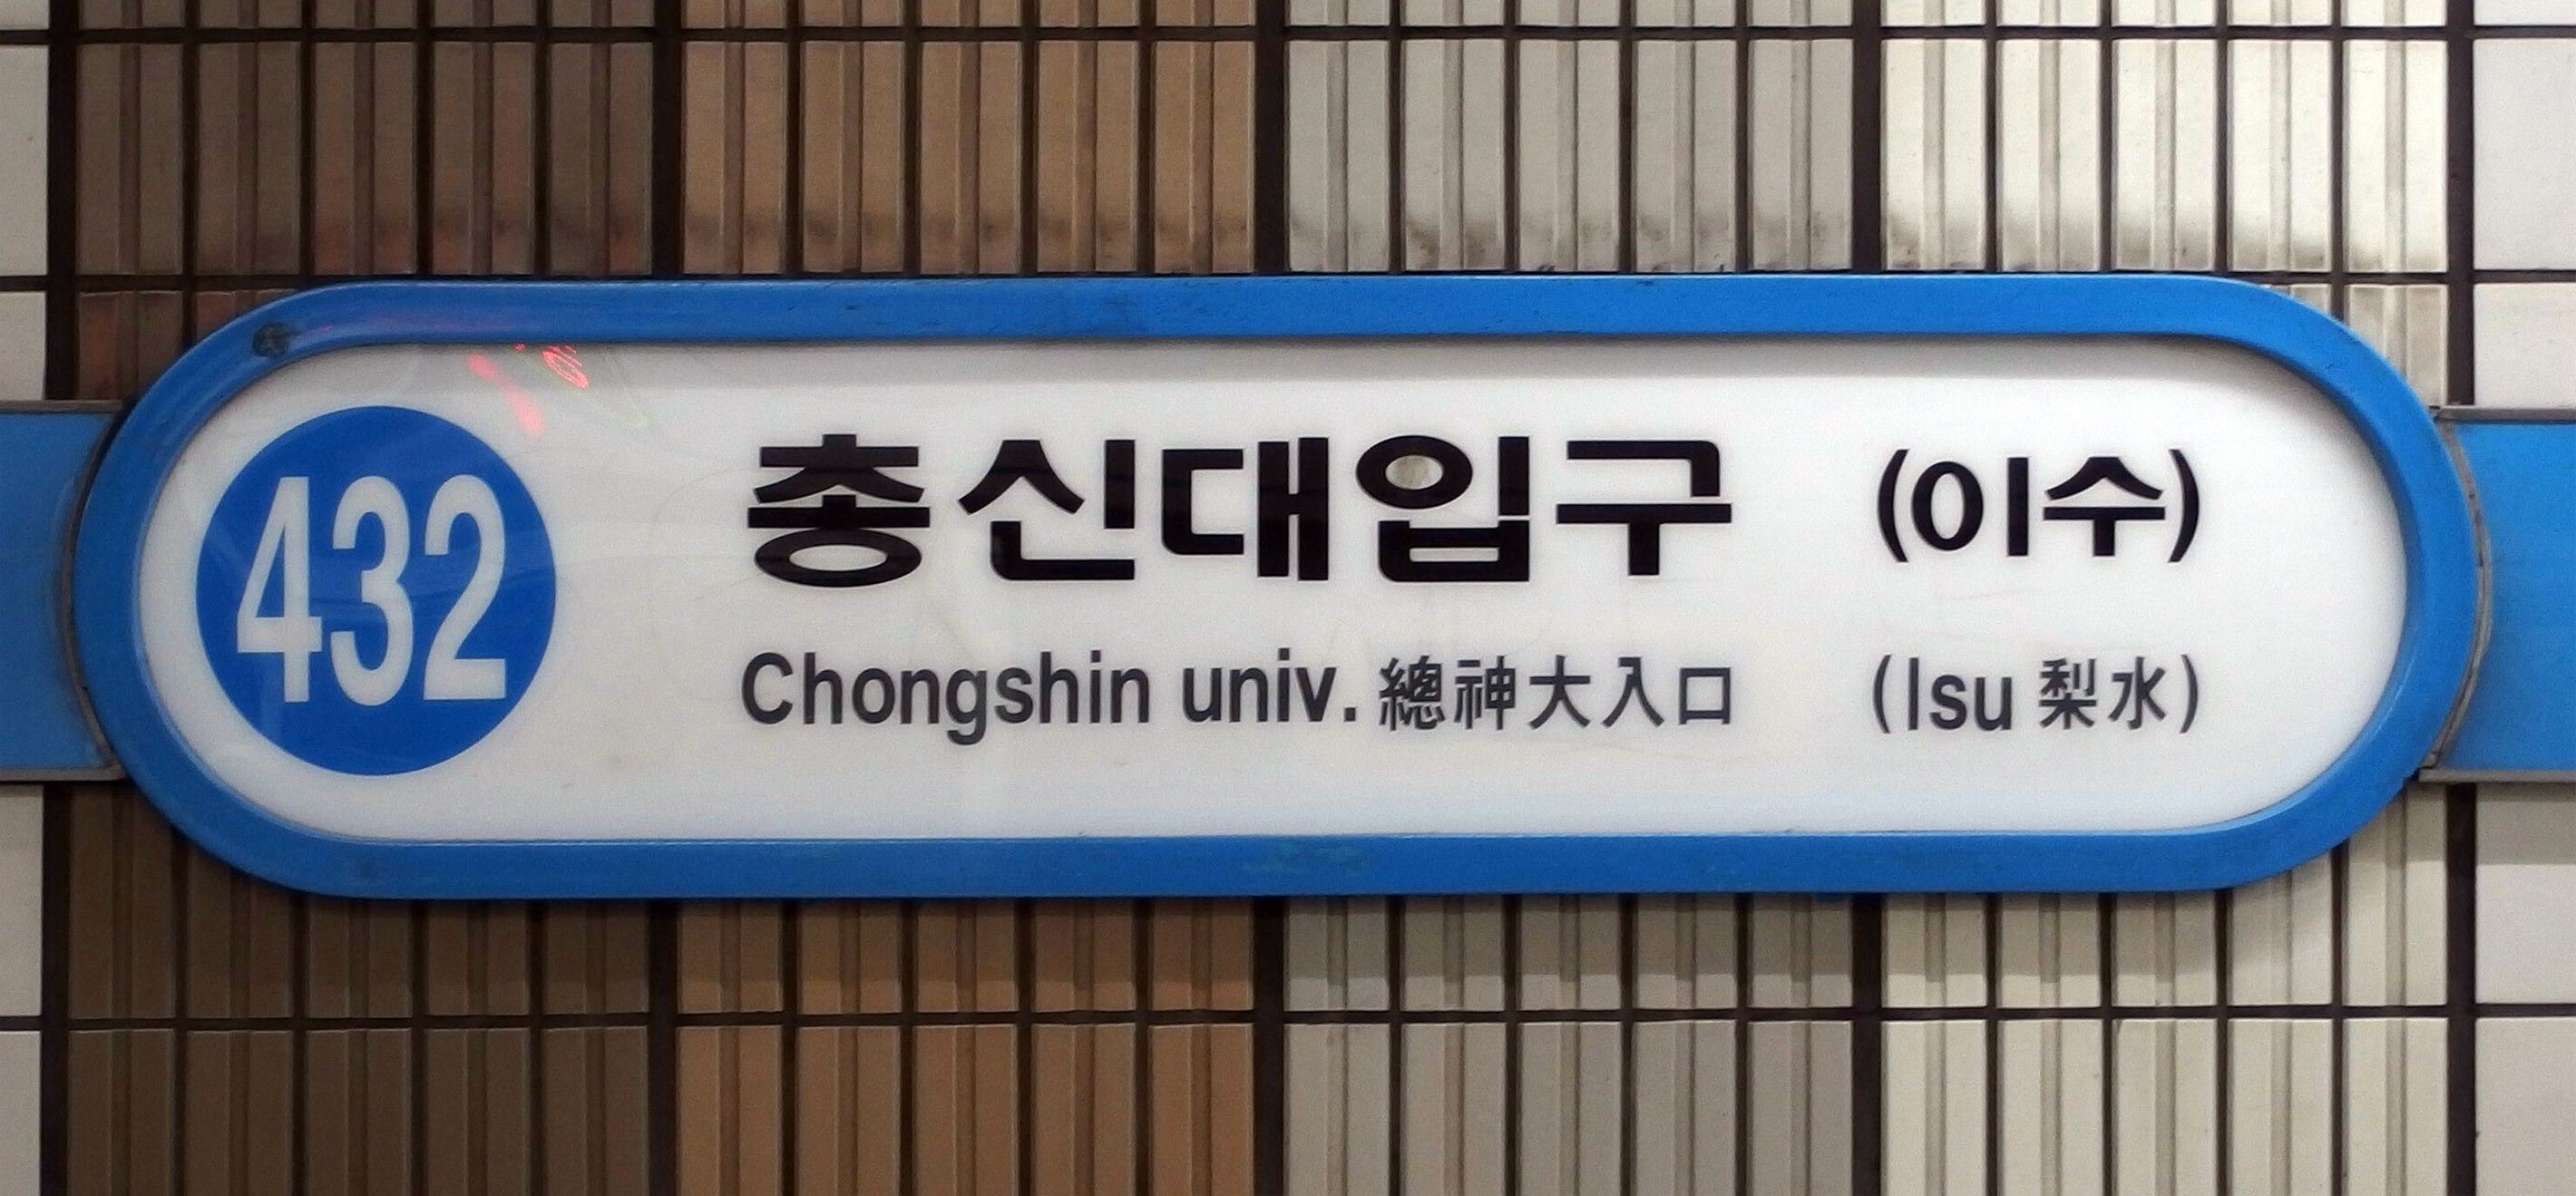 432_Chongshin_Univ.jpg